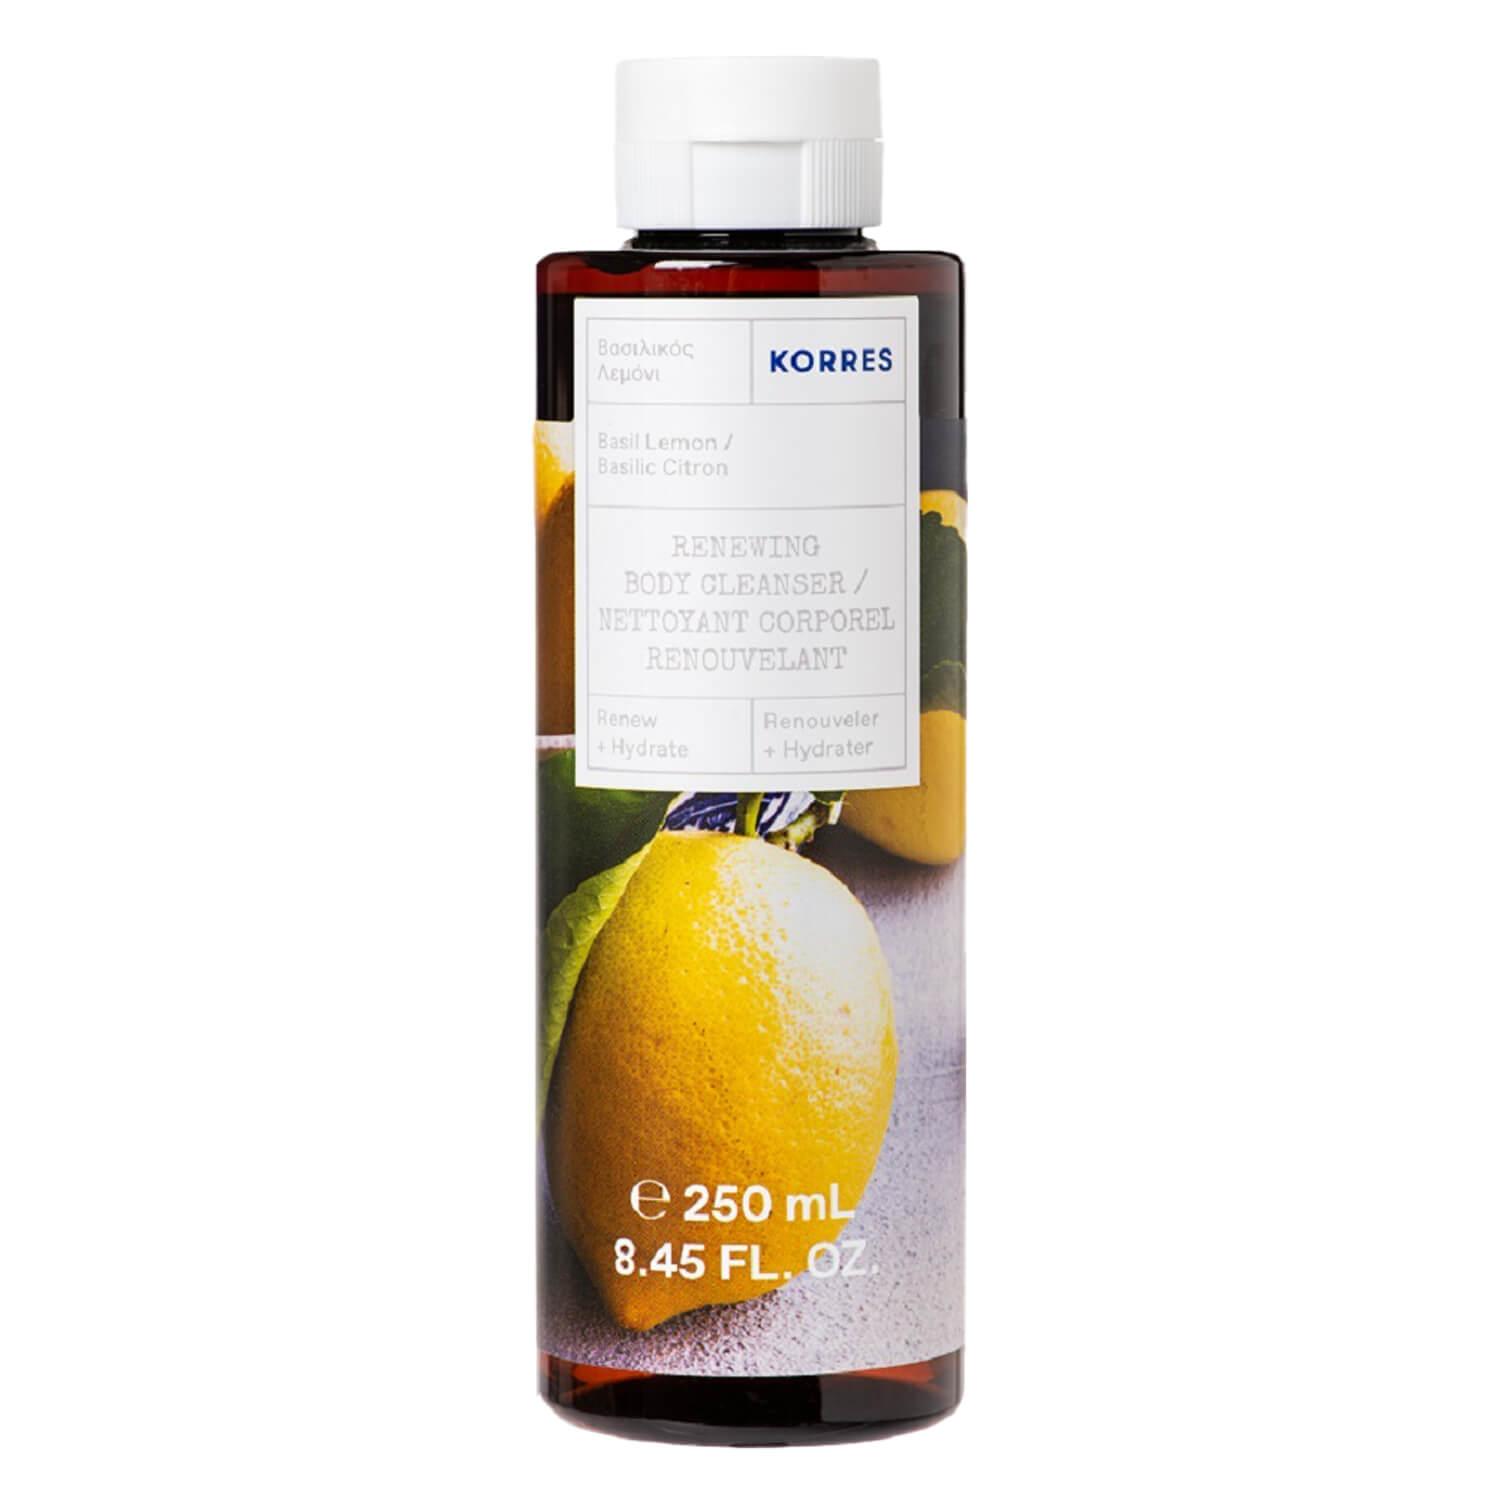 Korres Care - Basil Lemon Renewing Body Cleanser